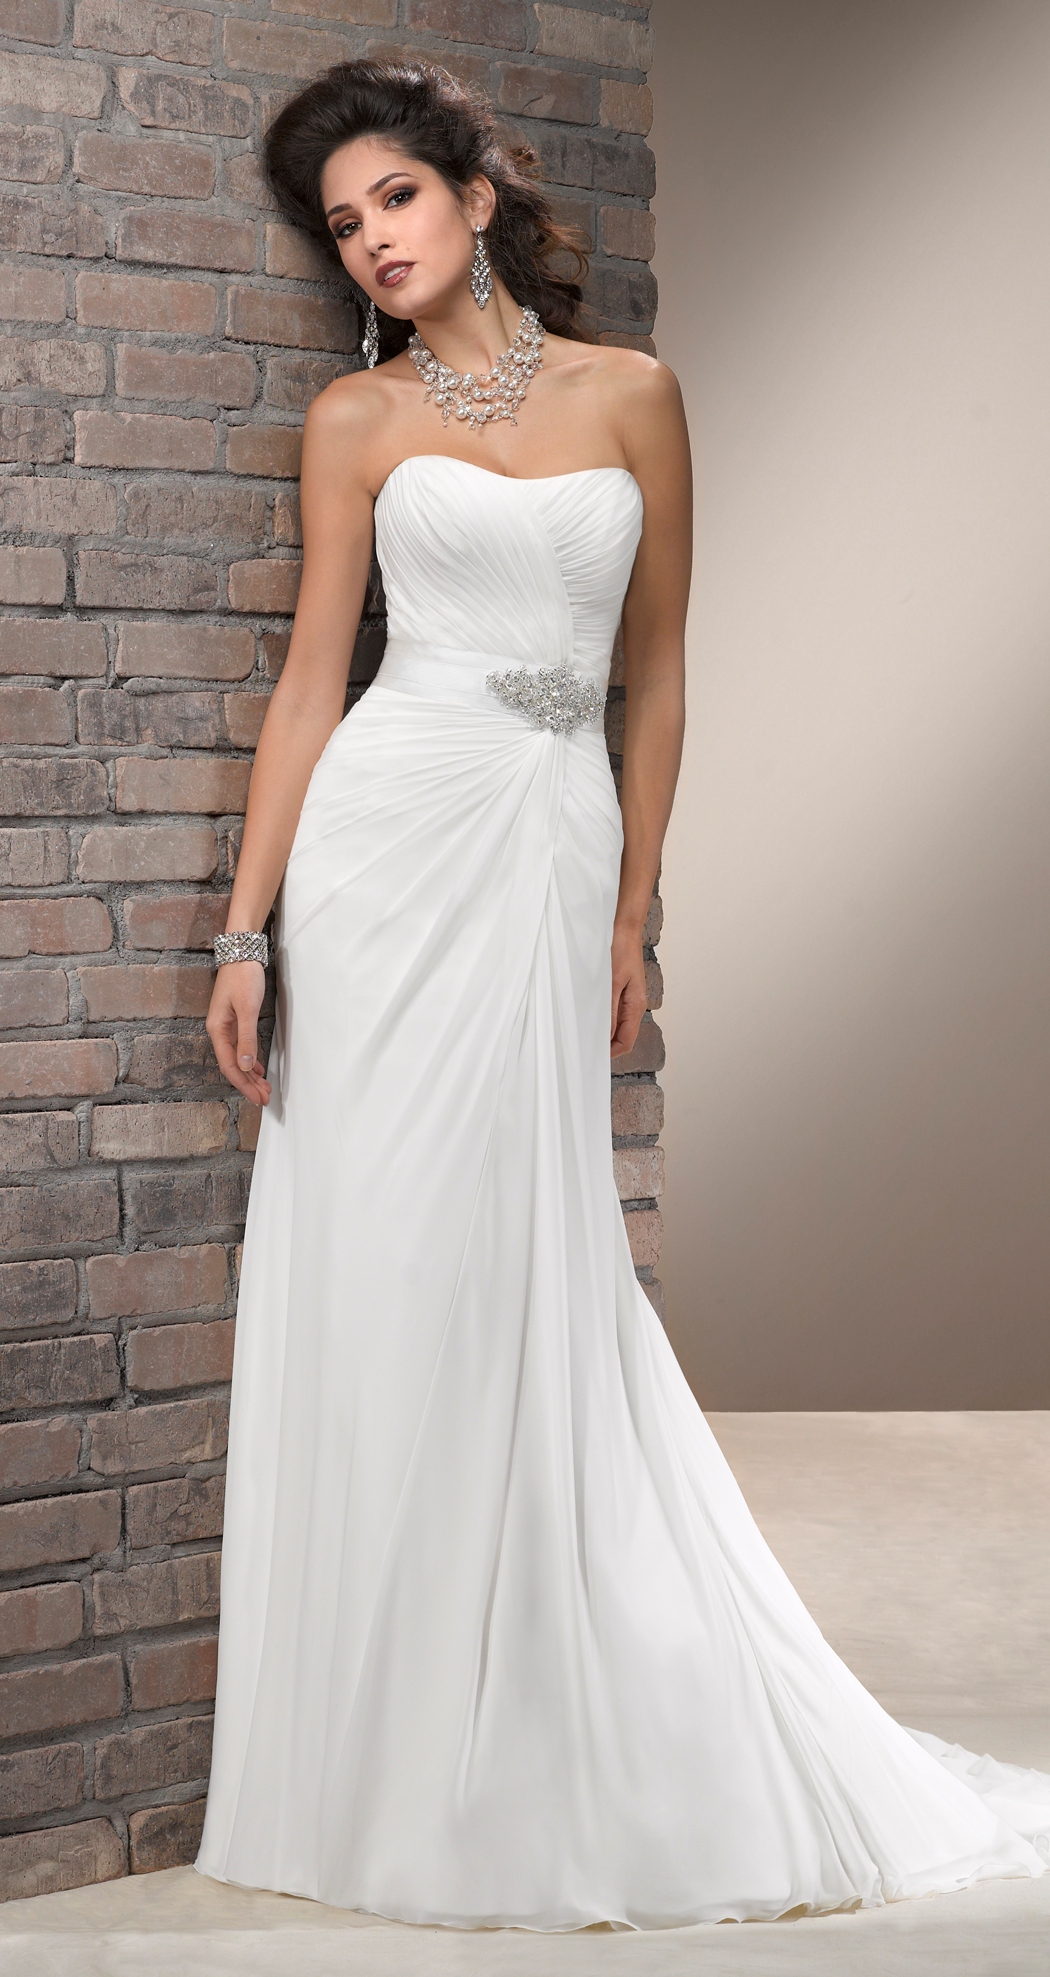 simple elegant wedding dress ideas